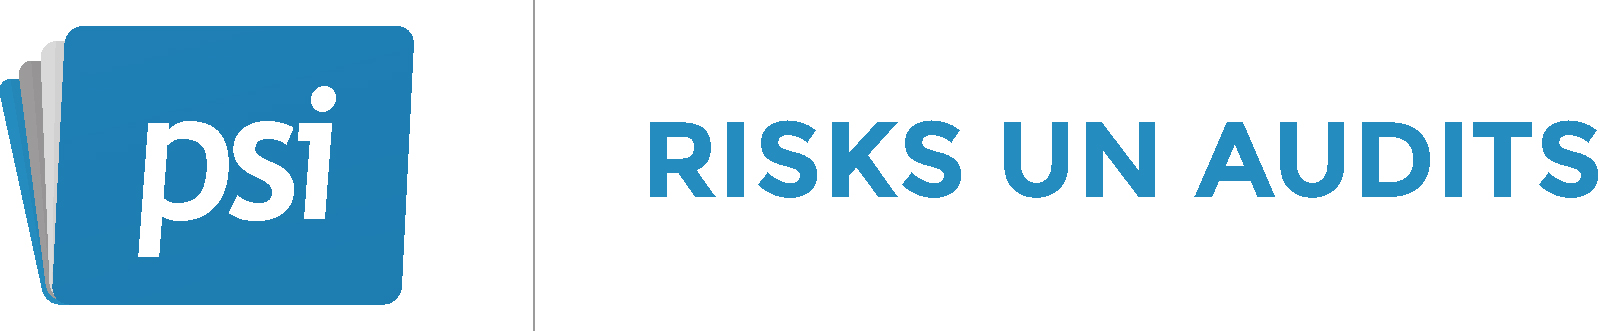 PSI_risks_un_audits_logo.jpg